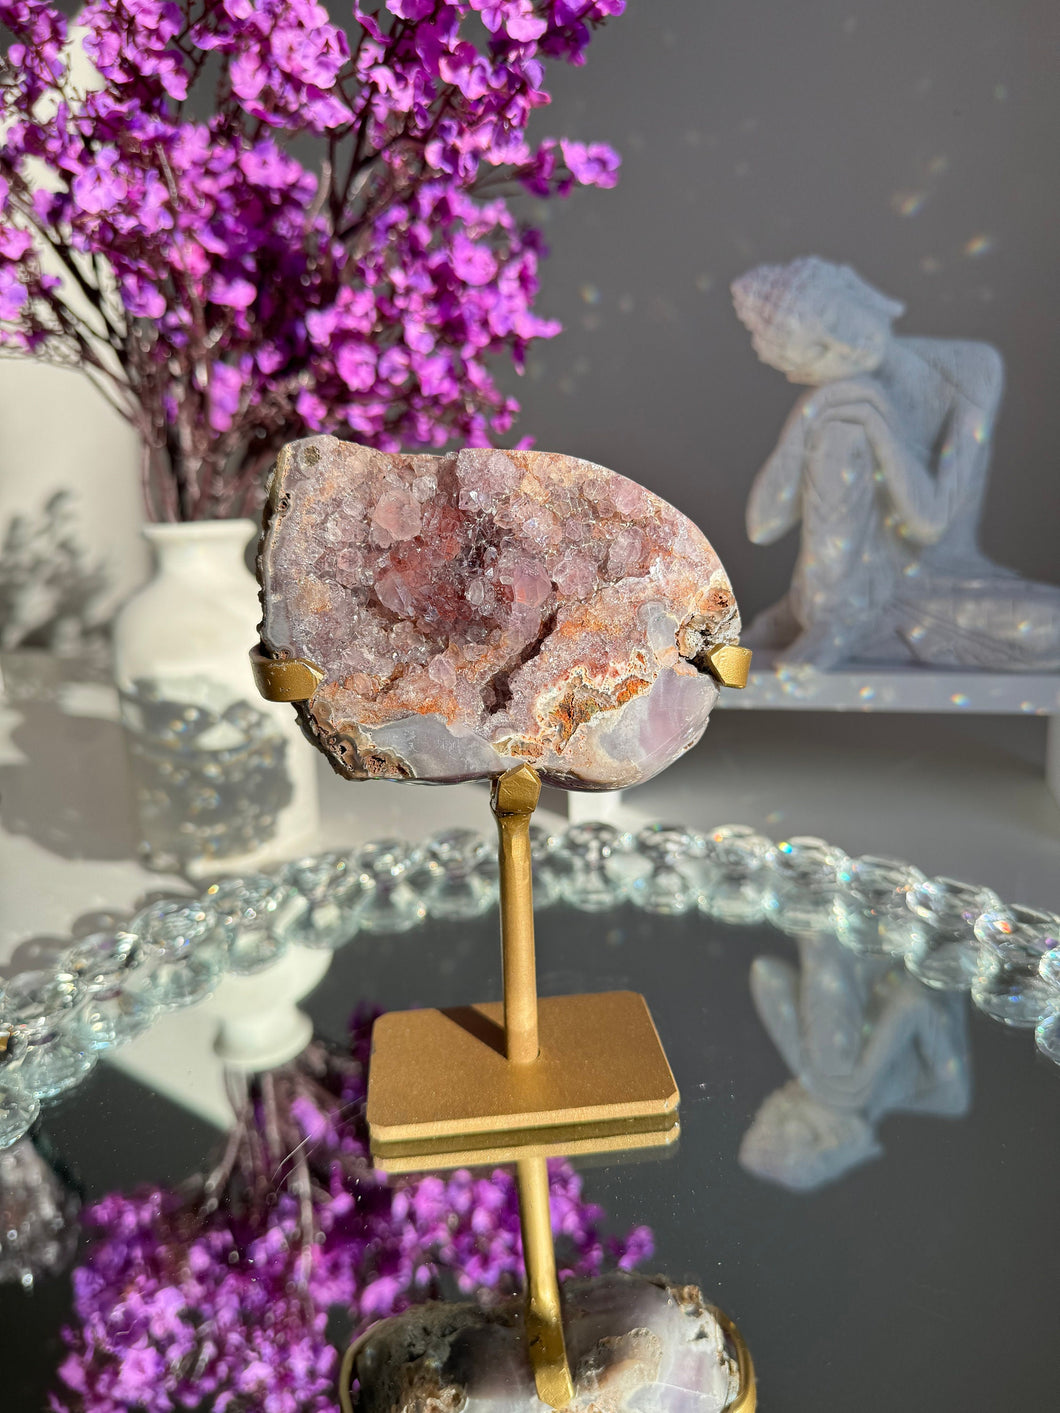 druzy pink amethyst geode with amethyst  2640